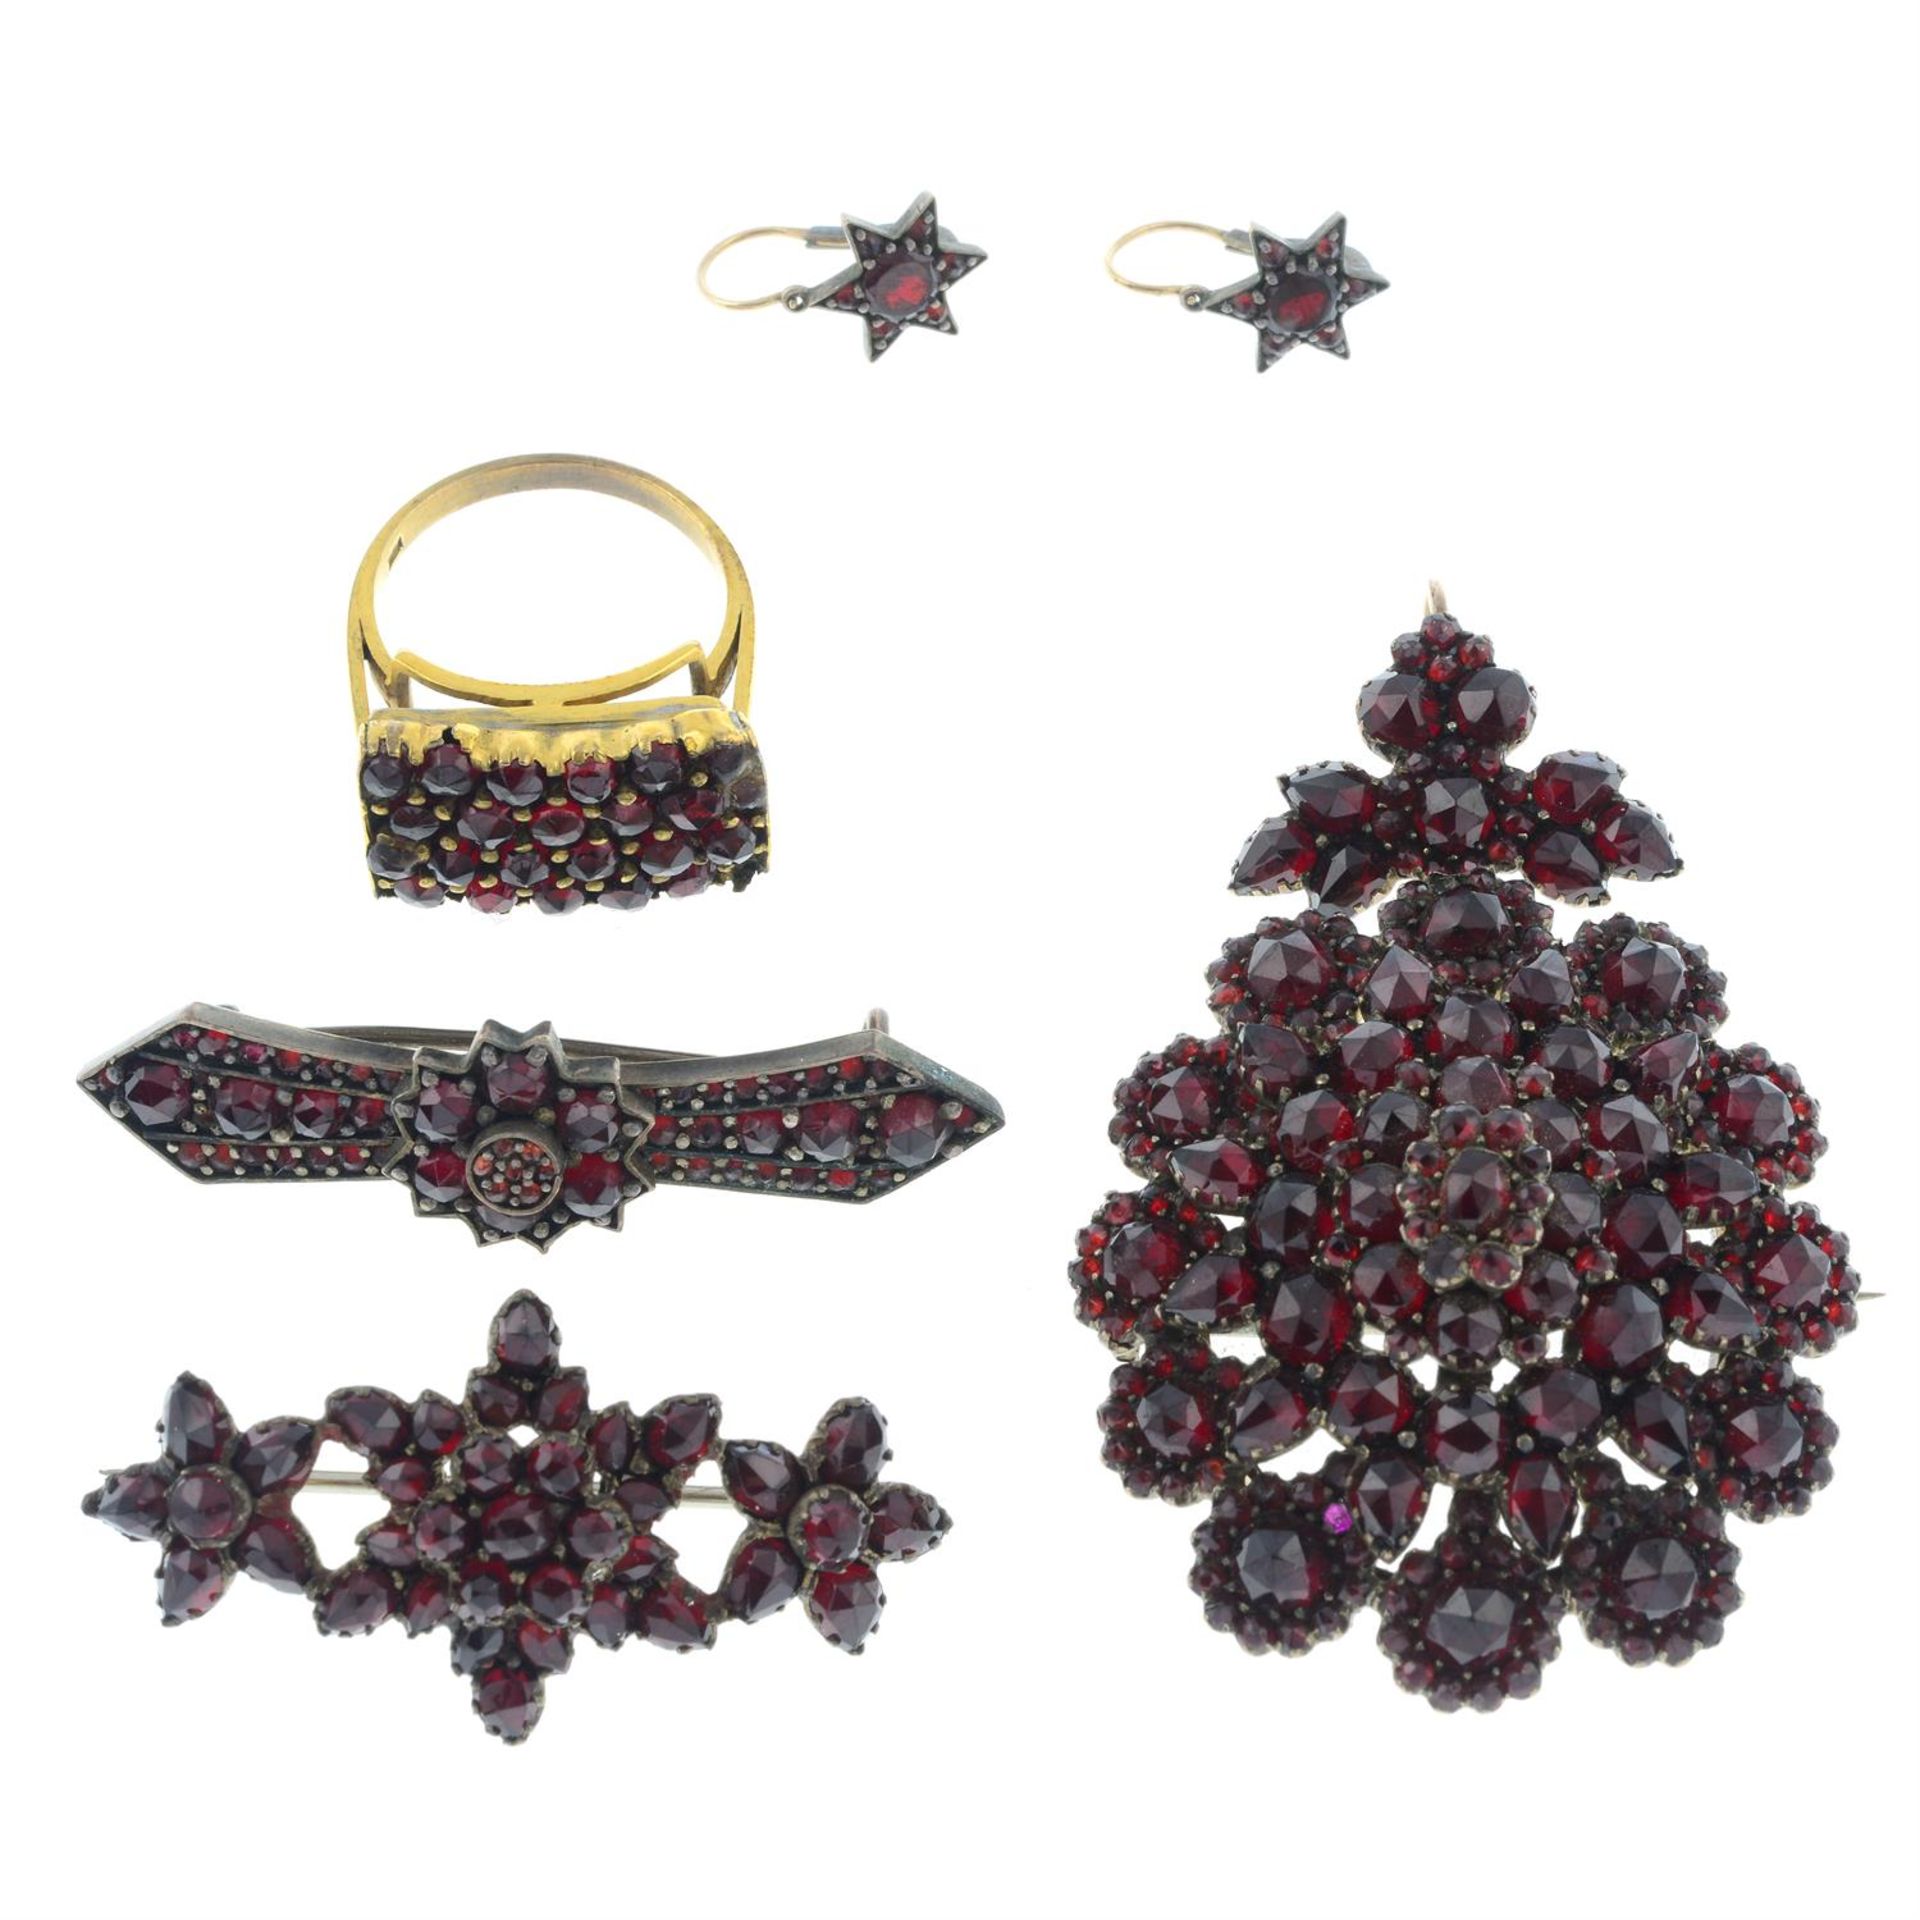 Five early 20th century 'Bohemian garnet' jewellery items.